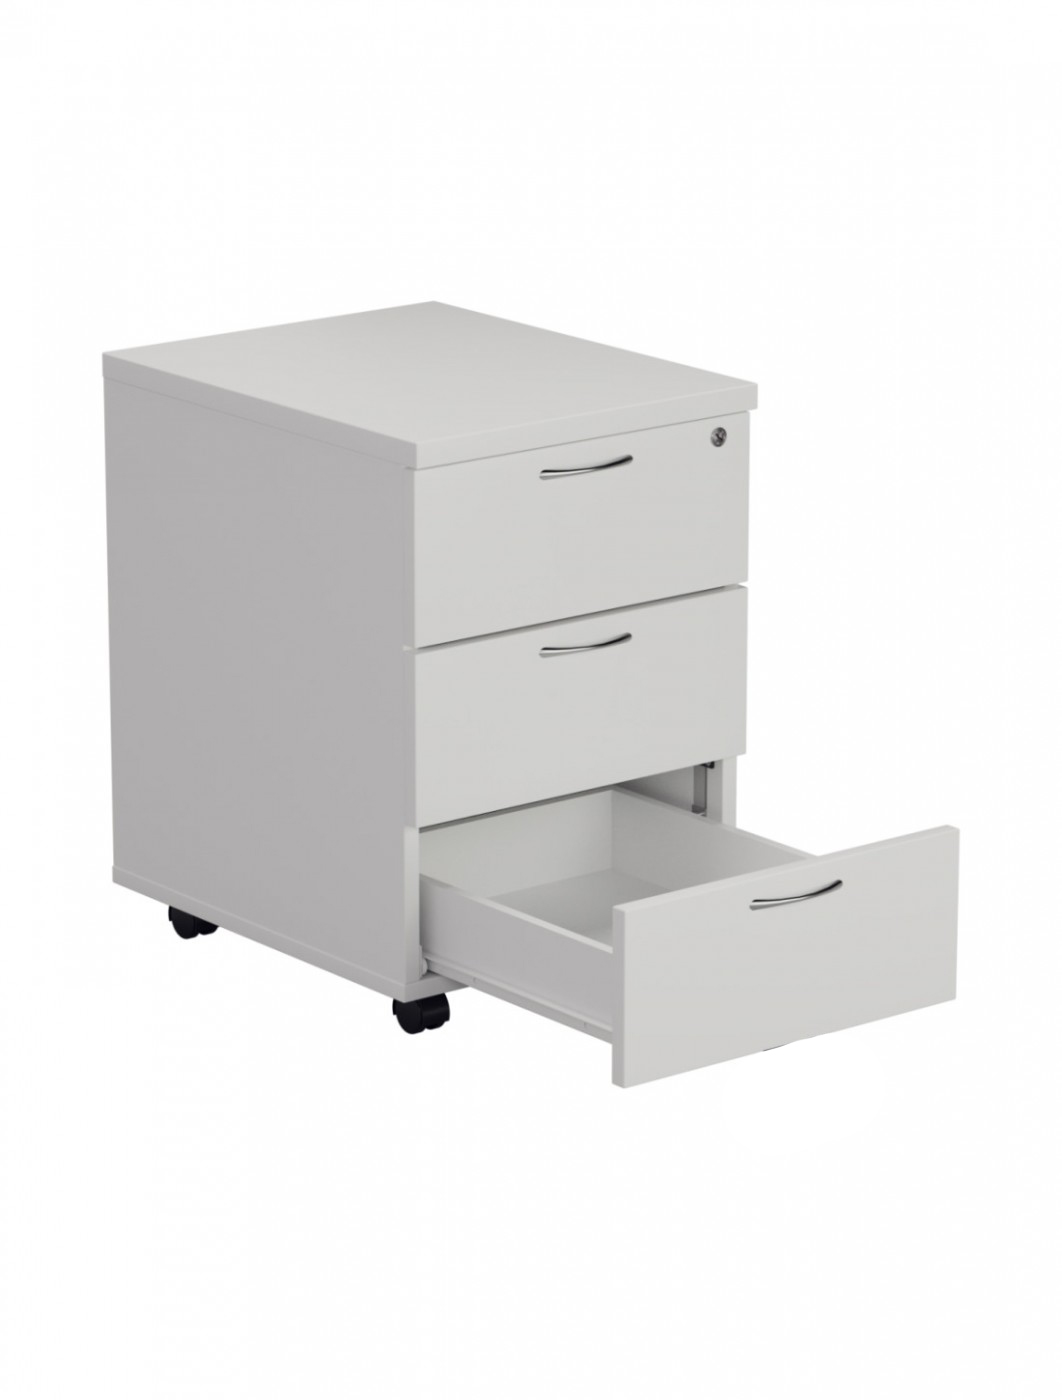 Drawer Unit Under Desk 3 Drawer With Central Lock White Color  